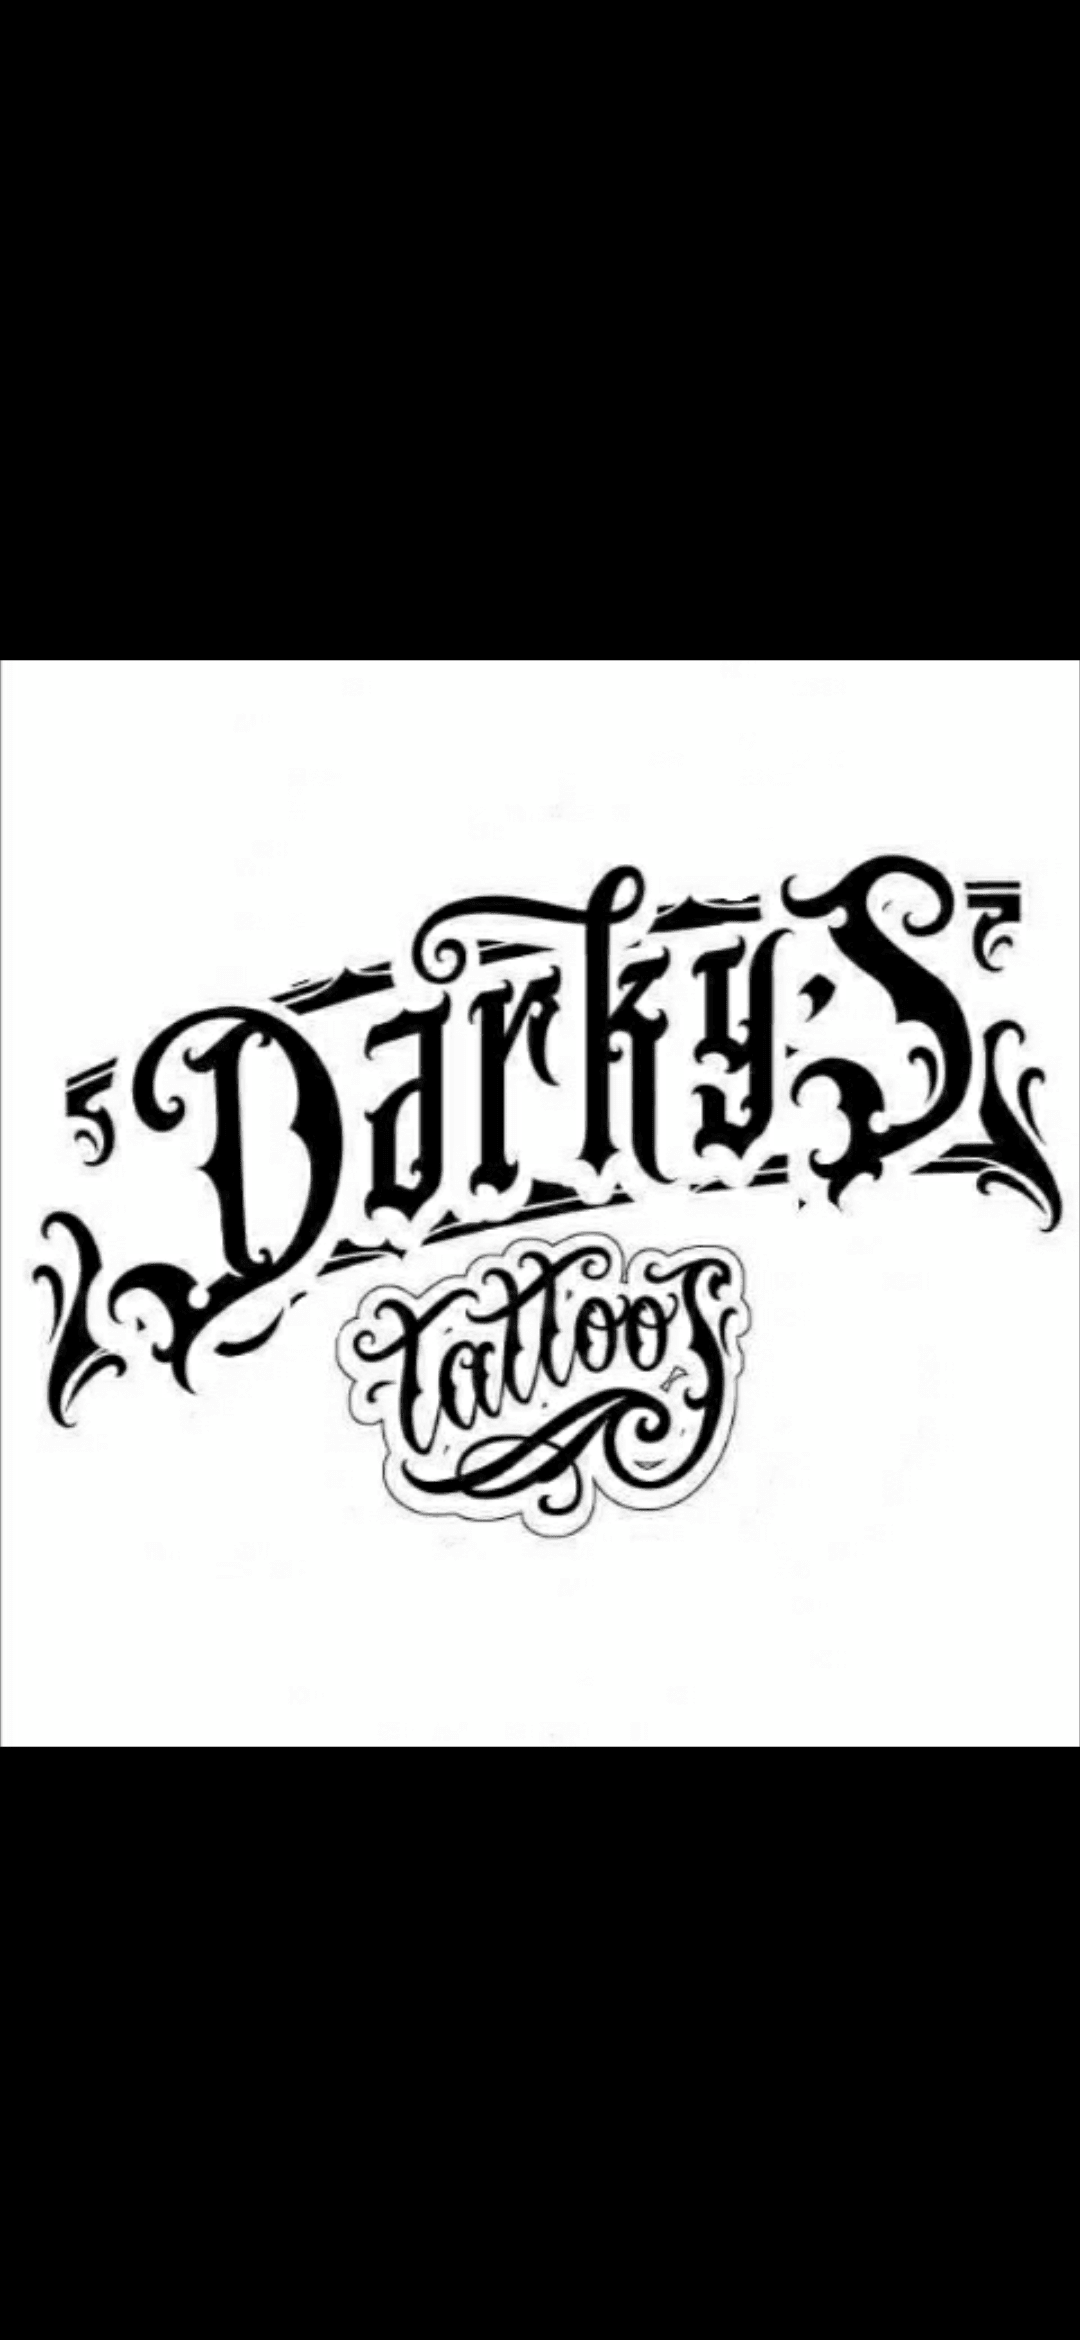 Darky's Tattoo